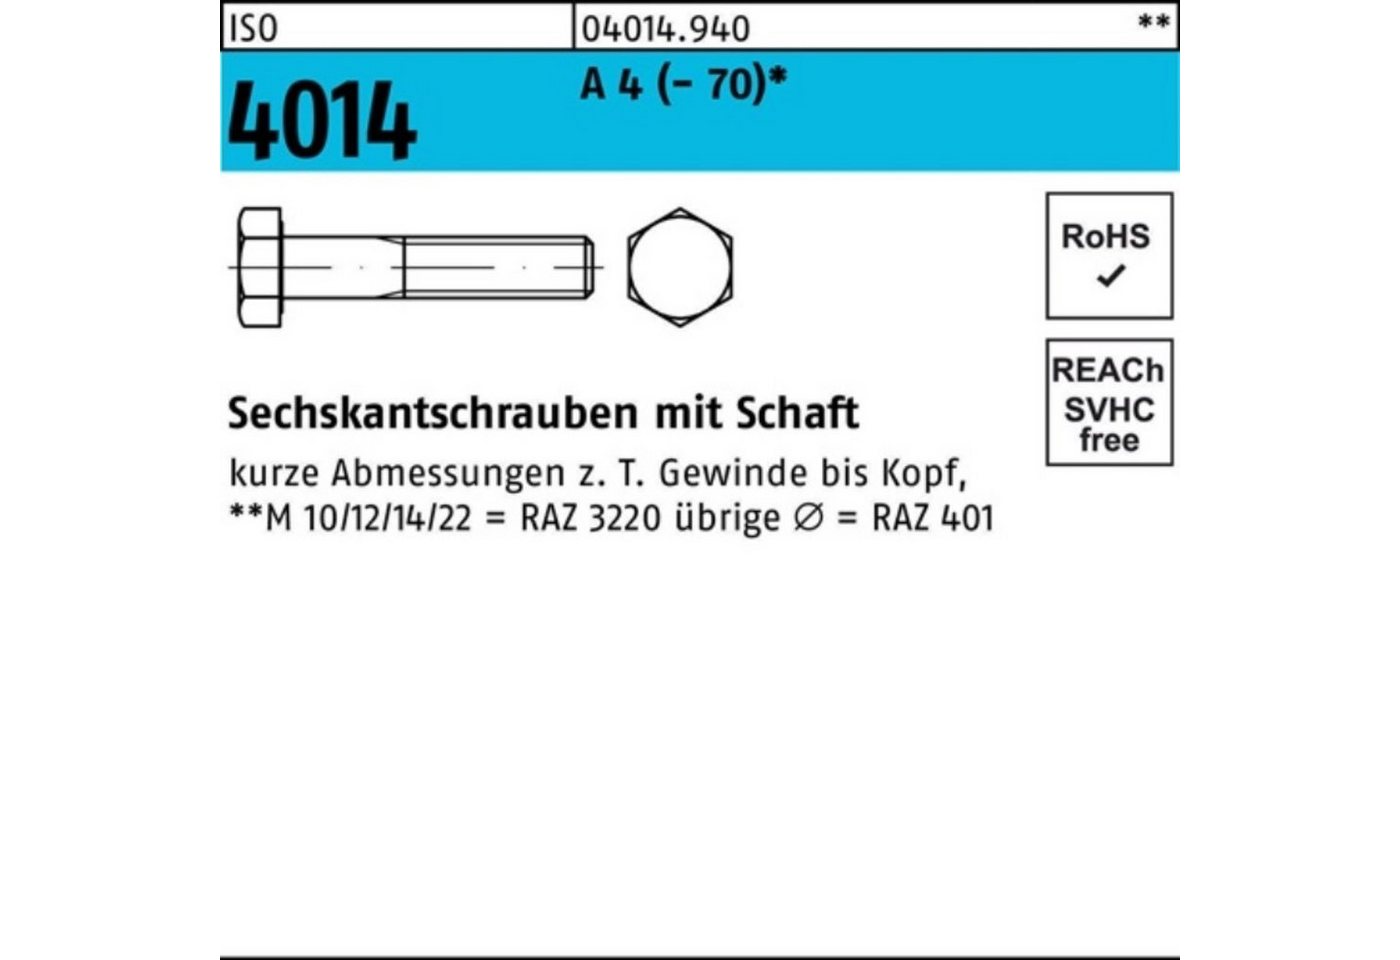 Bufab Sechskantschraube 100er Pack Sechskantschraube ISO 4014 Schaft M12x 80 A 4 (70) 50 St von Bufab